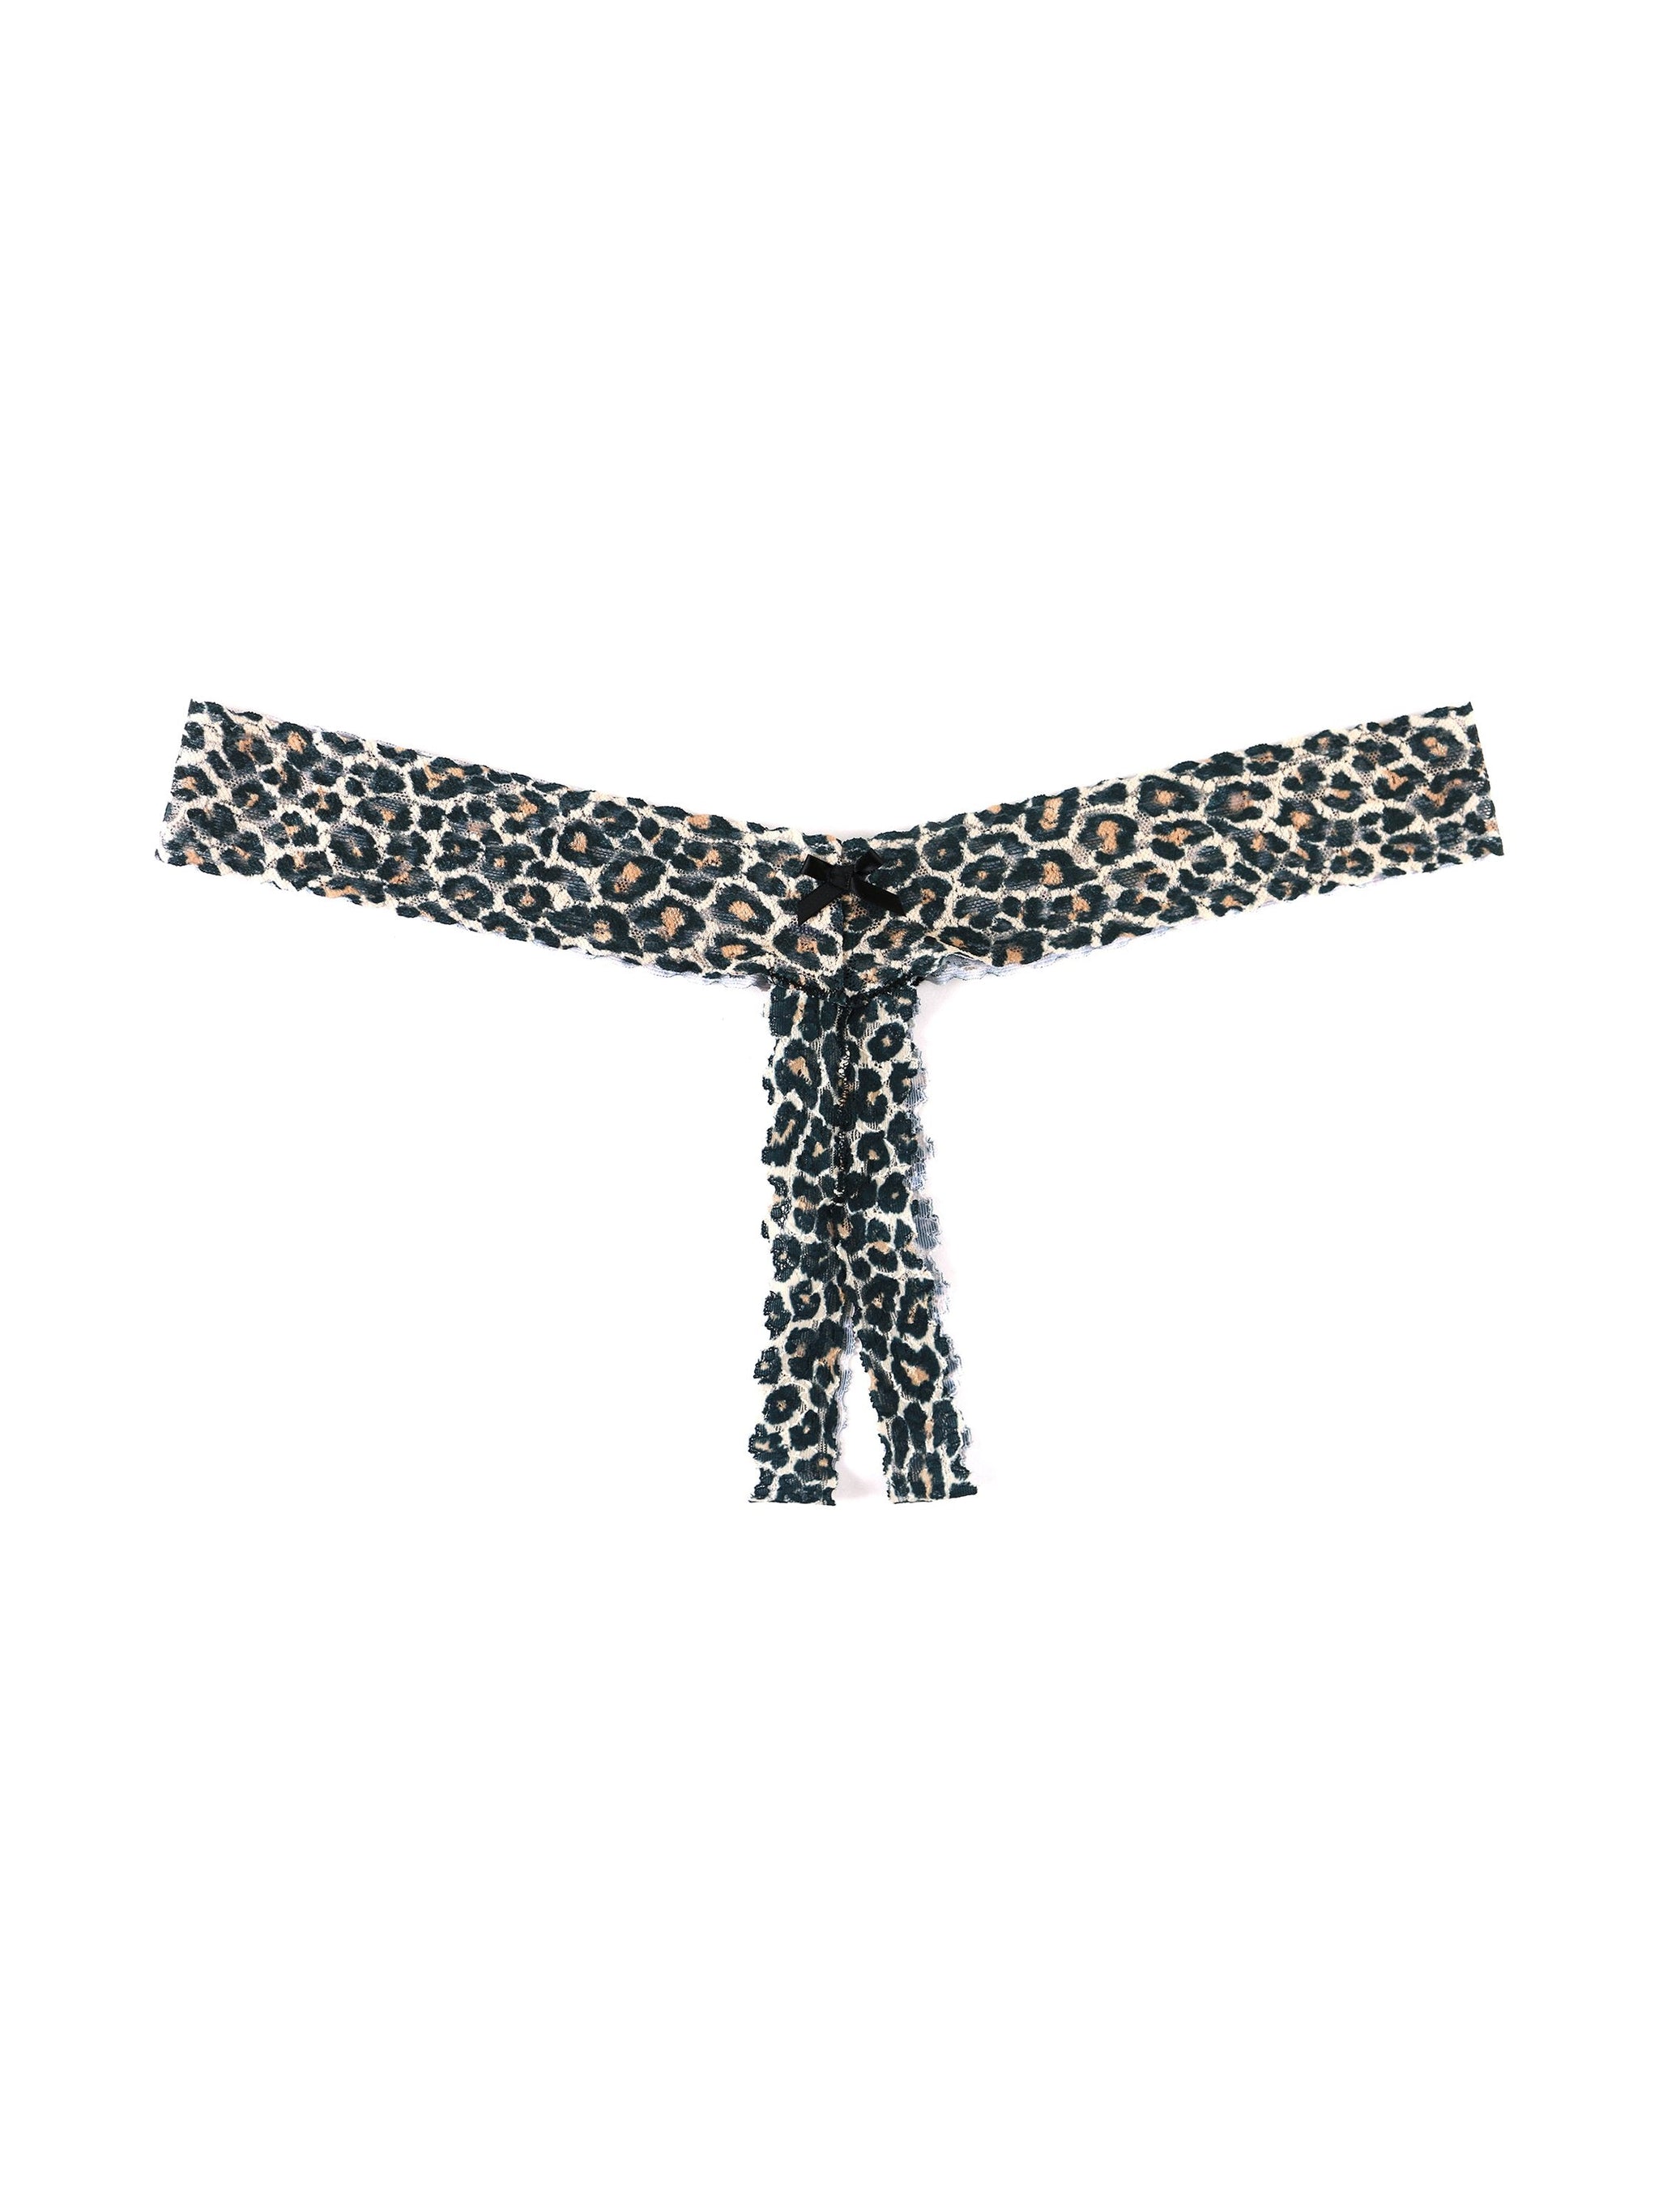 Plus Size Classic Leopard Signature Lace Crotchless Thong-CLASSIC LEOPARD-Hanky Panky